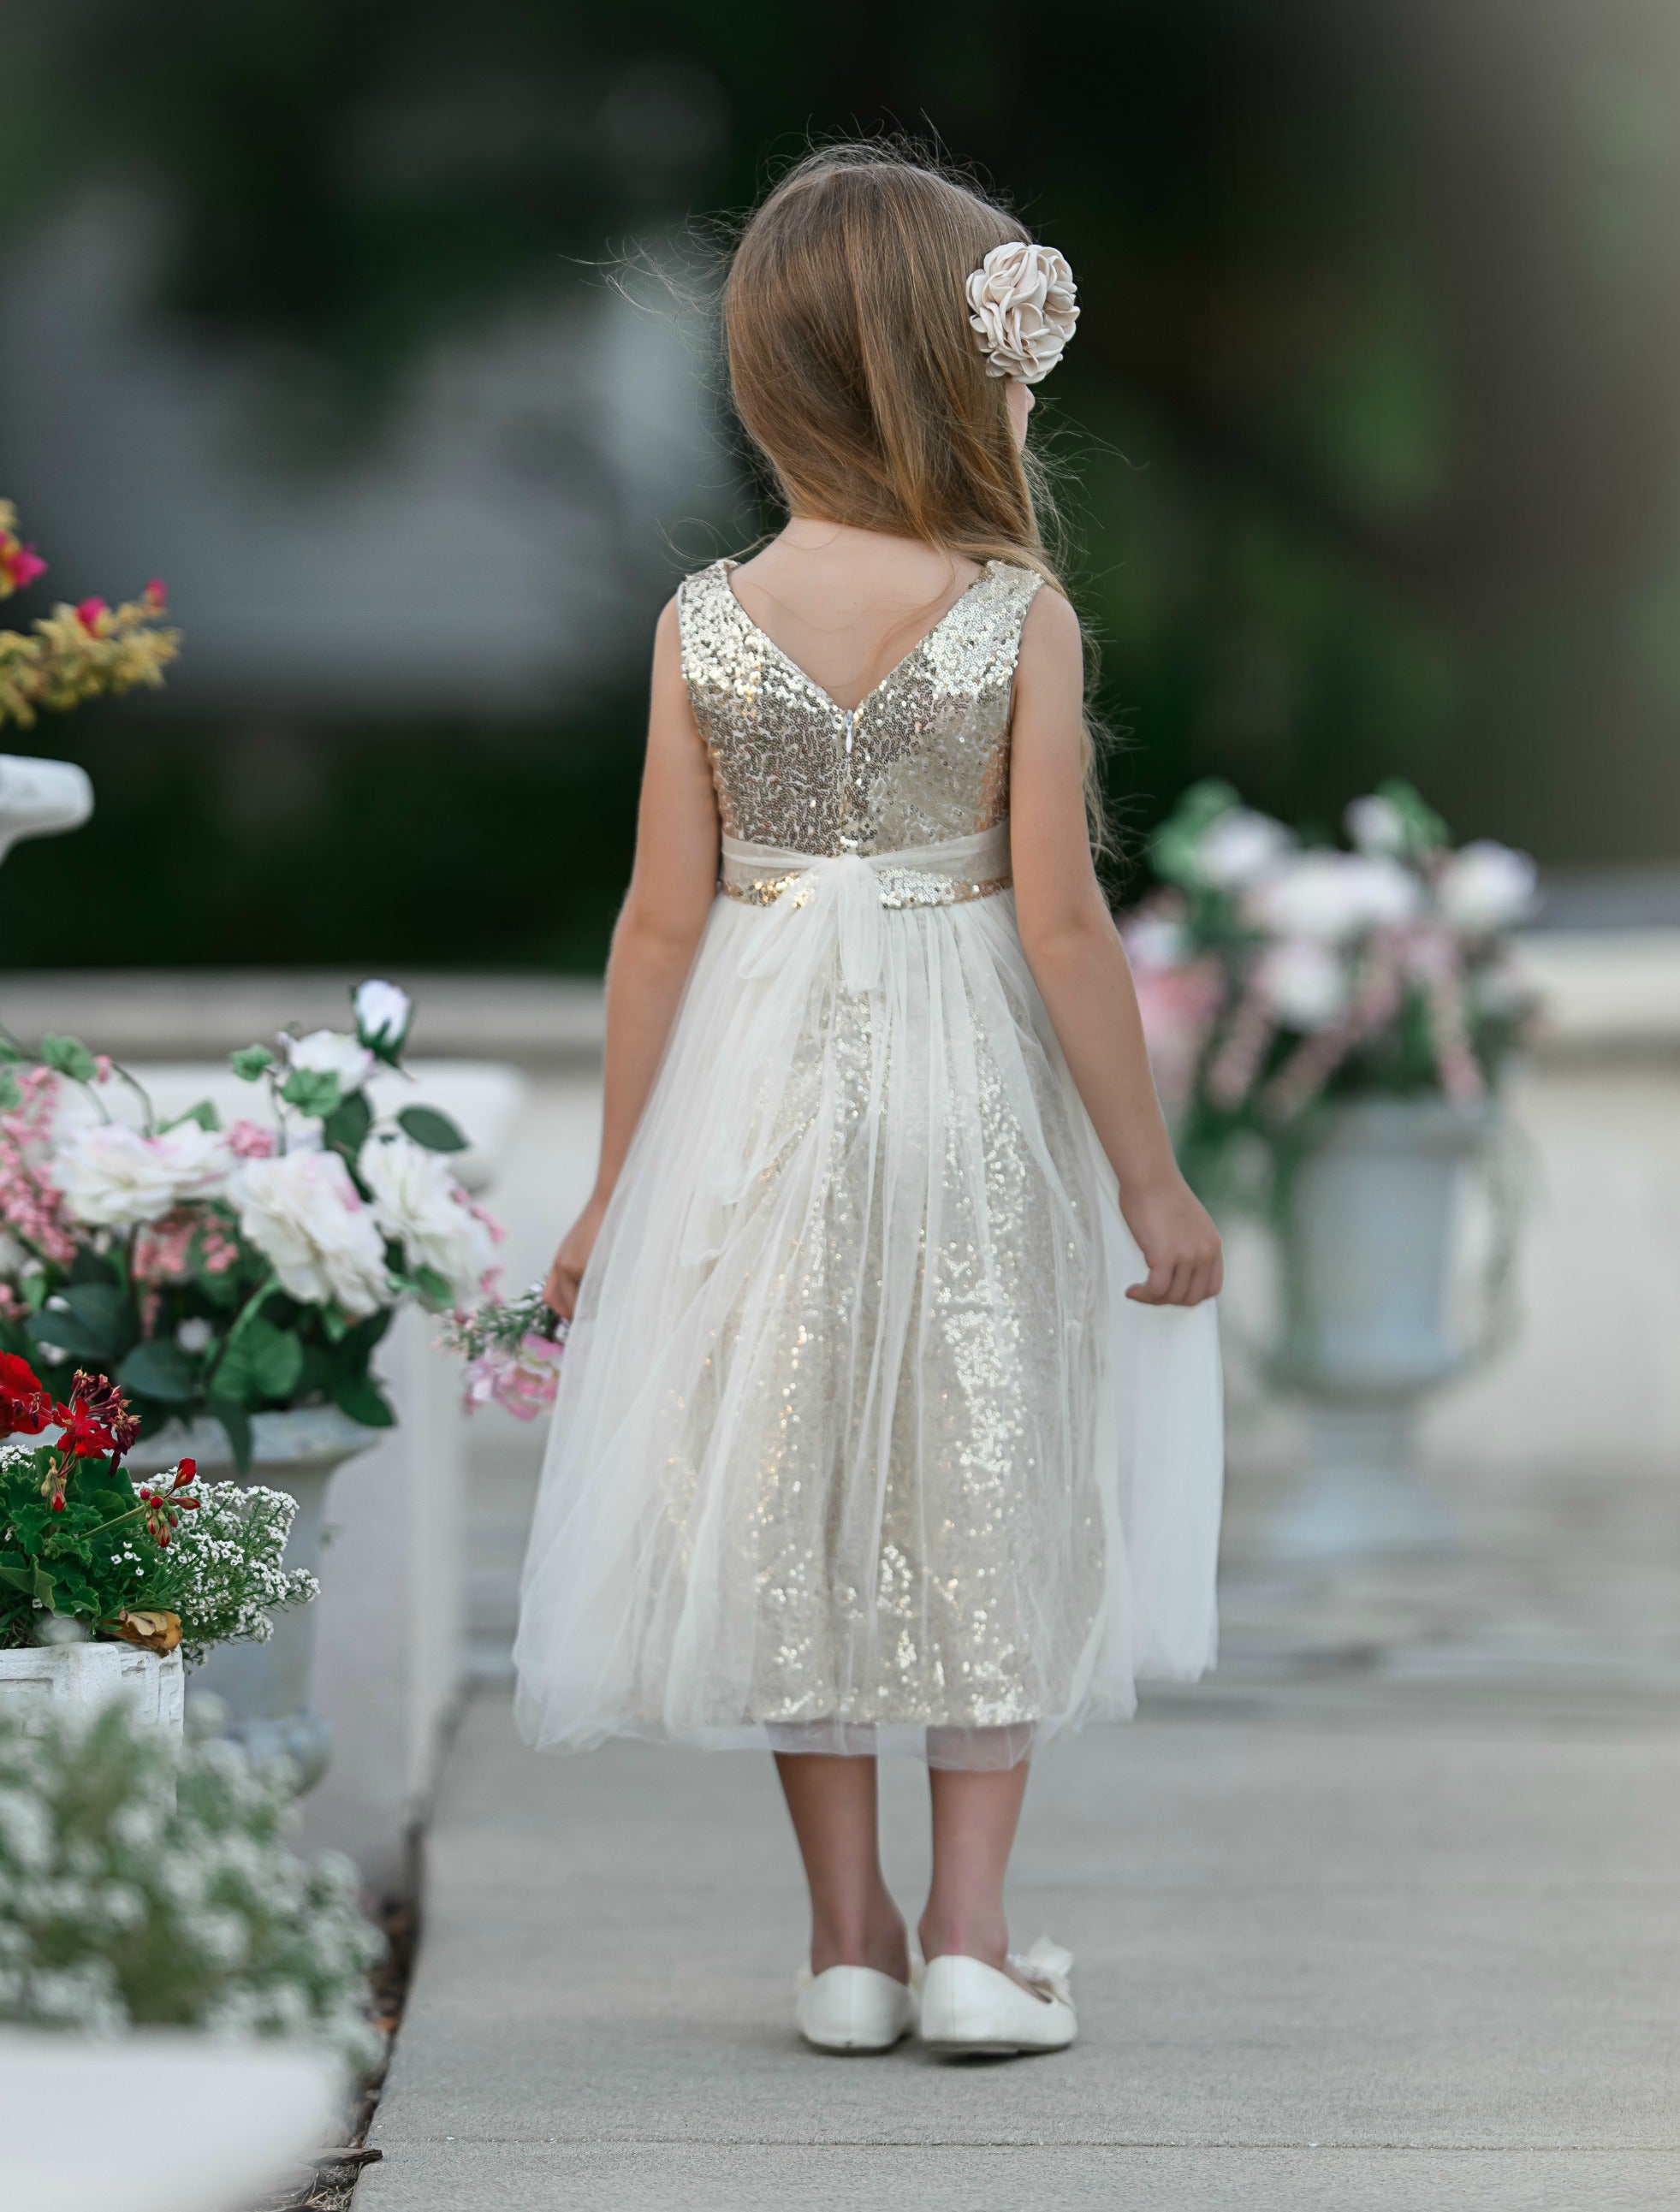 girls white sparkly dress